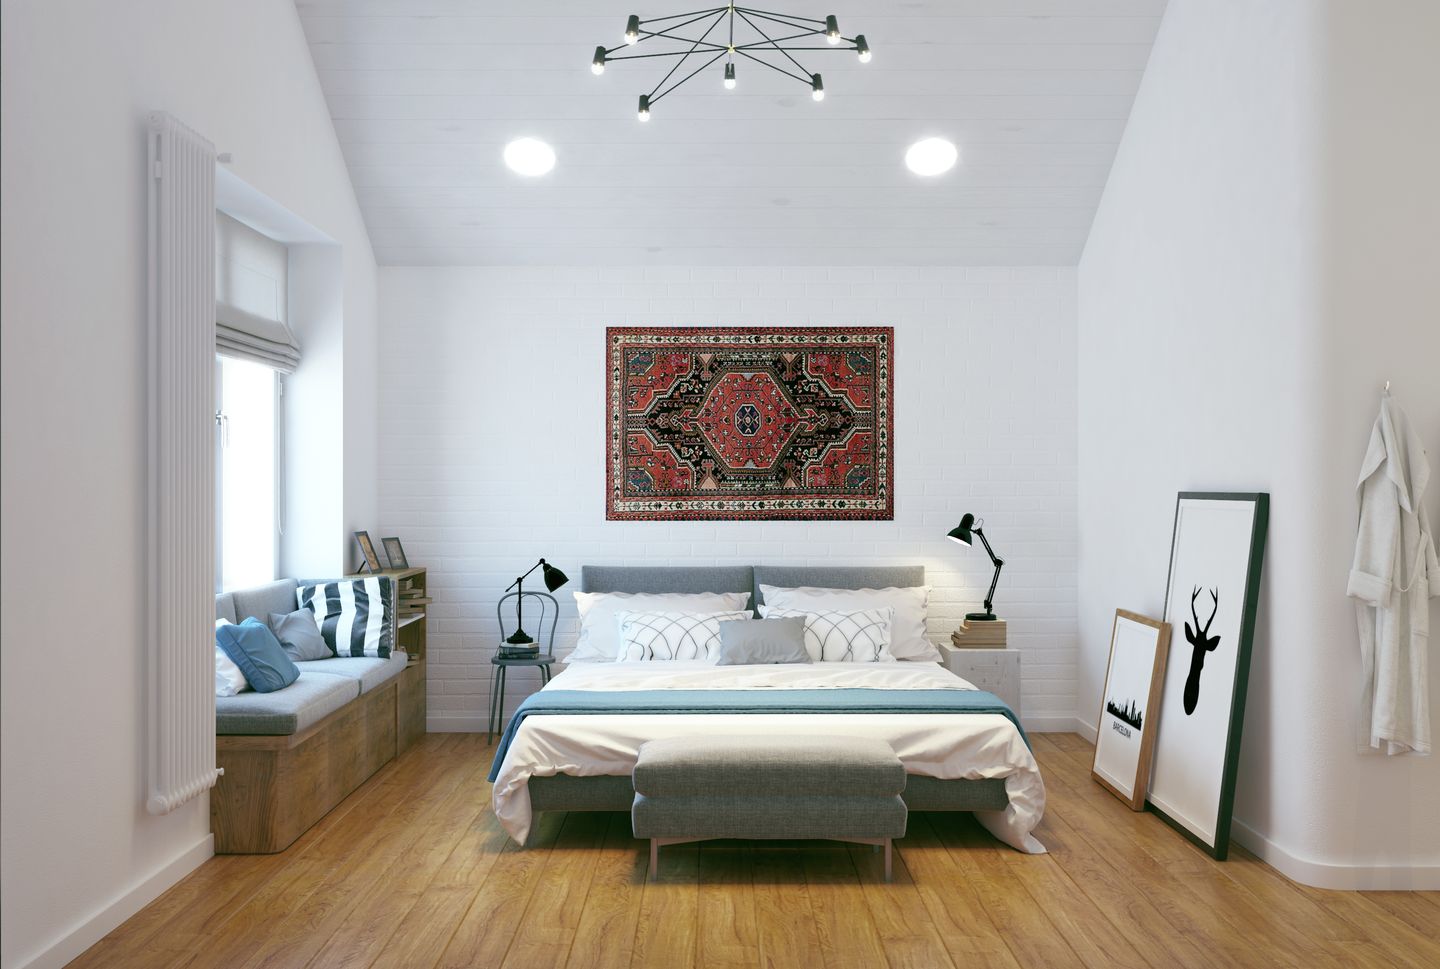 Warna cat kamar tidur yang menenangkan putih memberikan kesan hangat.